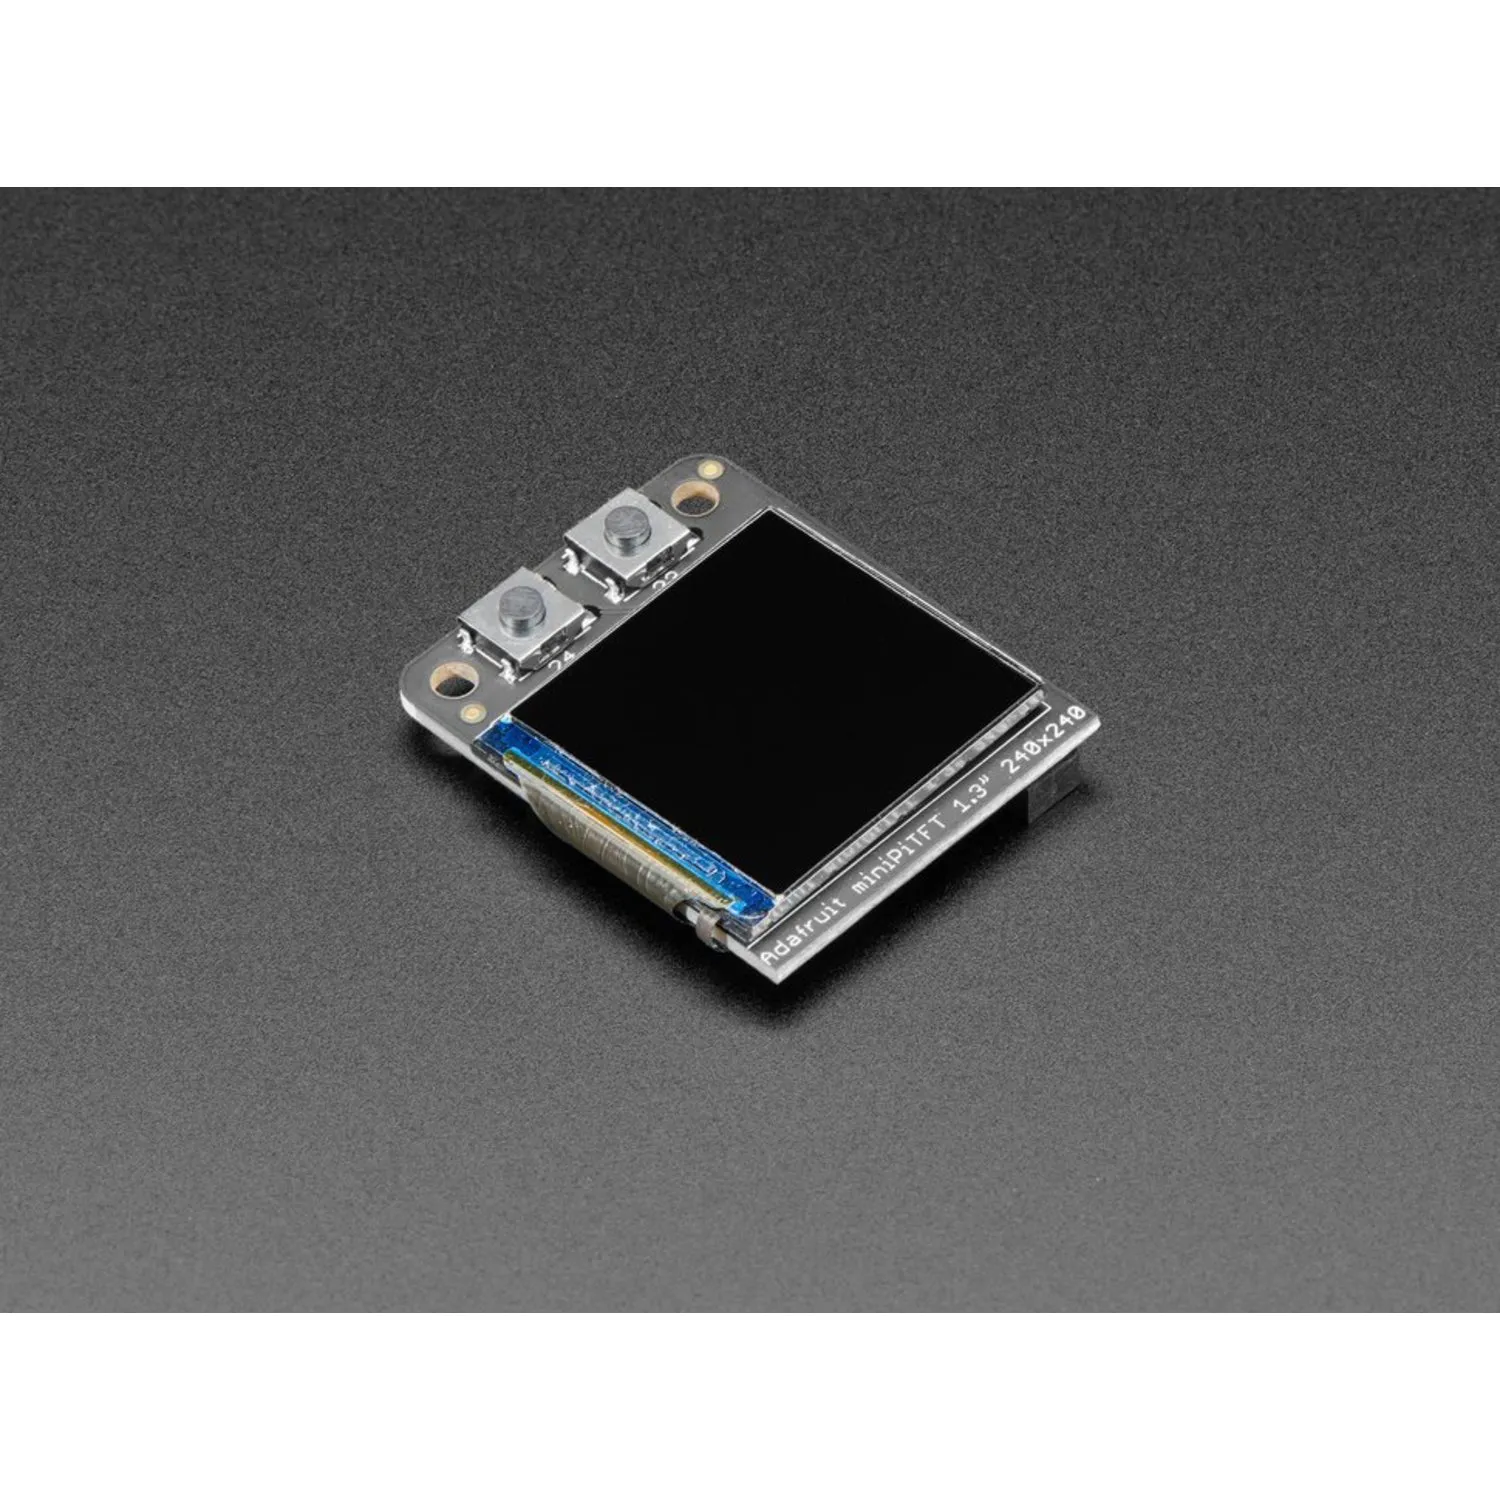 Photo of Adafruit Mini PiTFT 1.3 - 240x240 TFT Add-on for Raspberry Pi